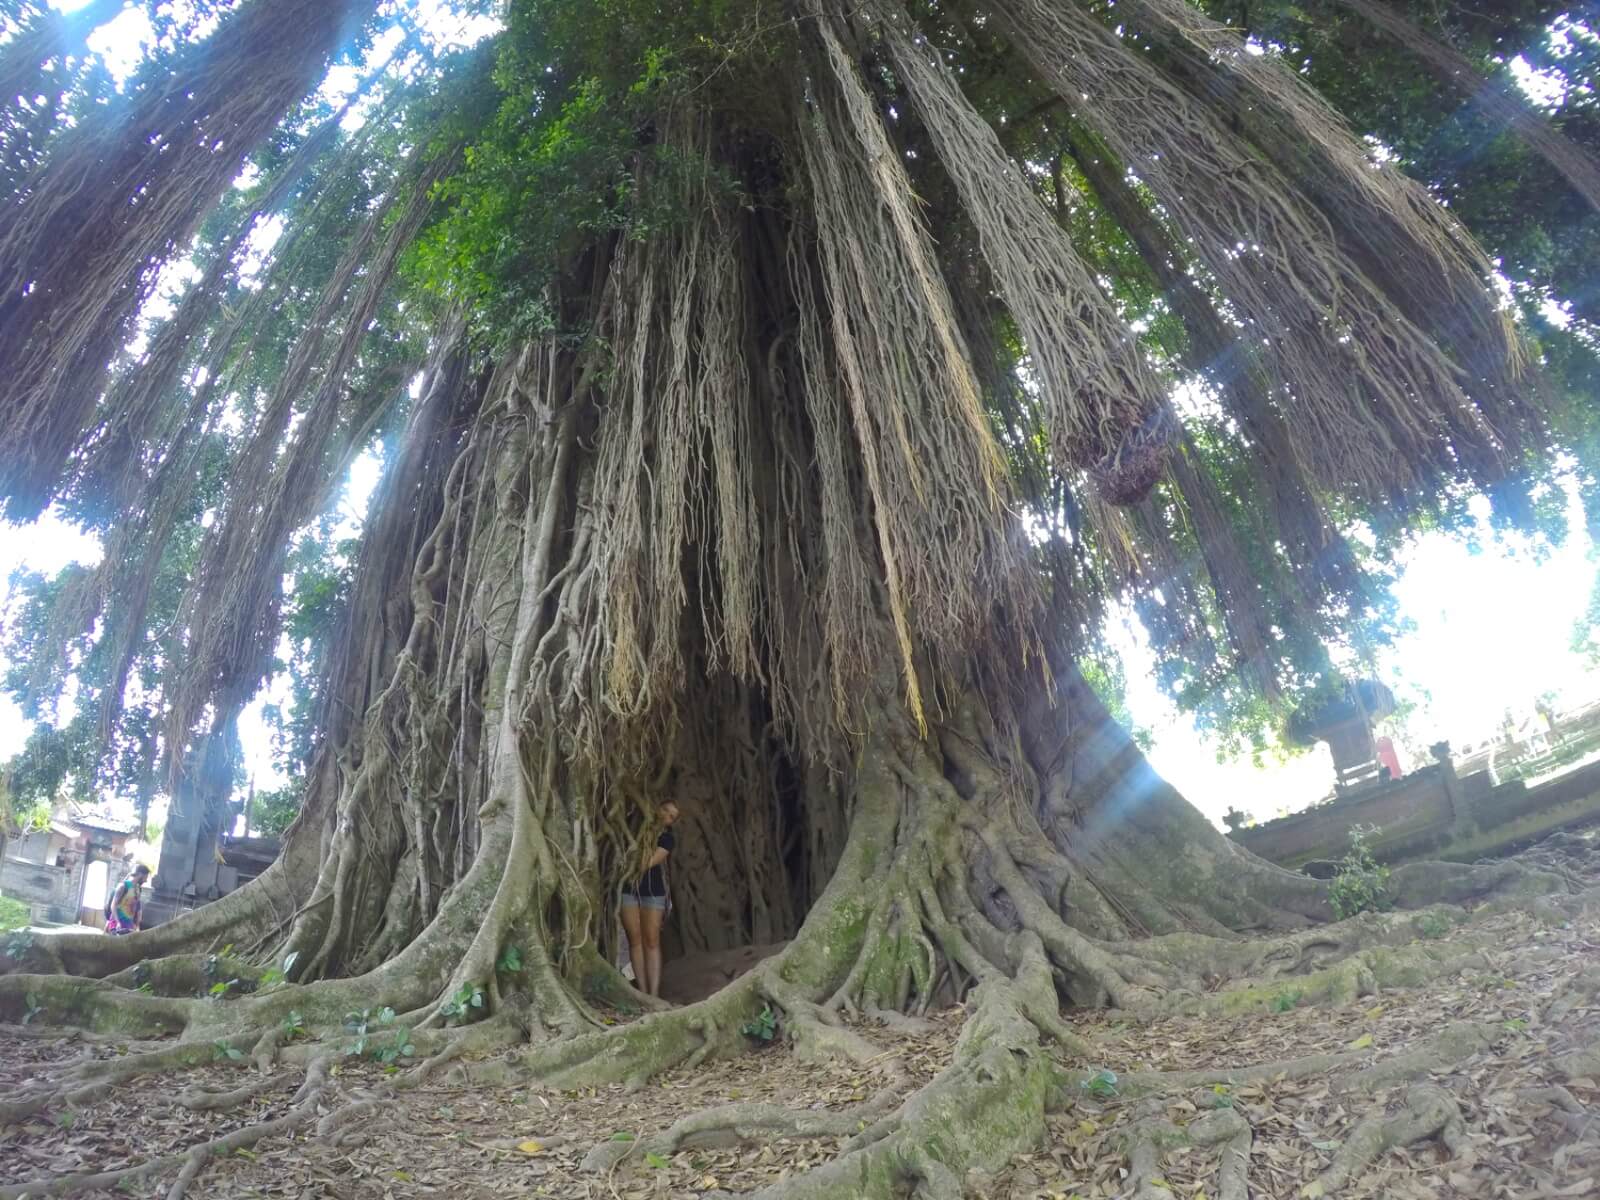 Banyan tree hide and seek